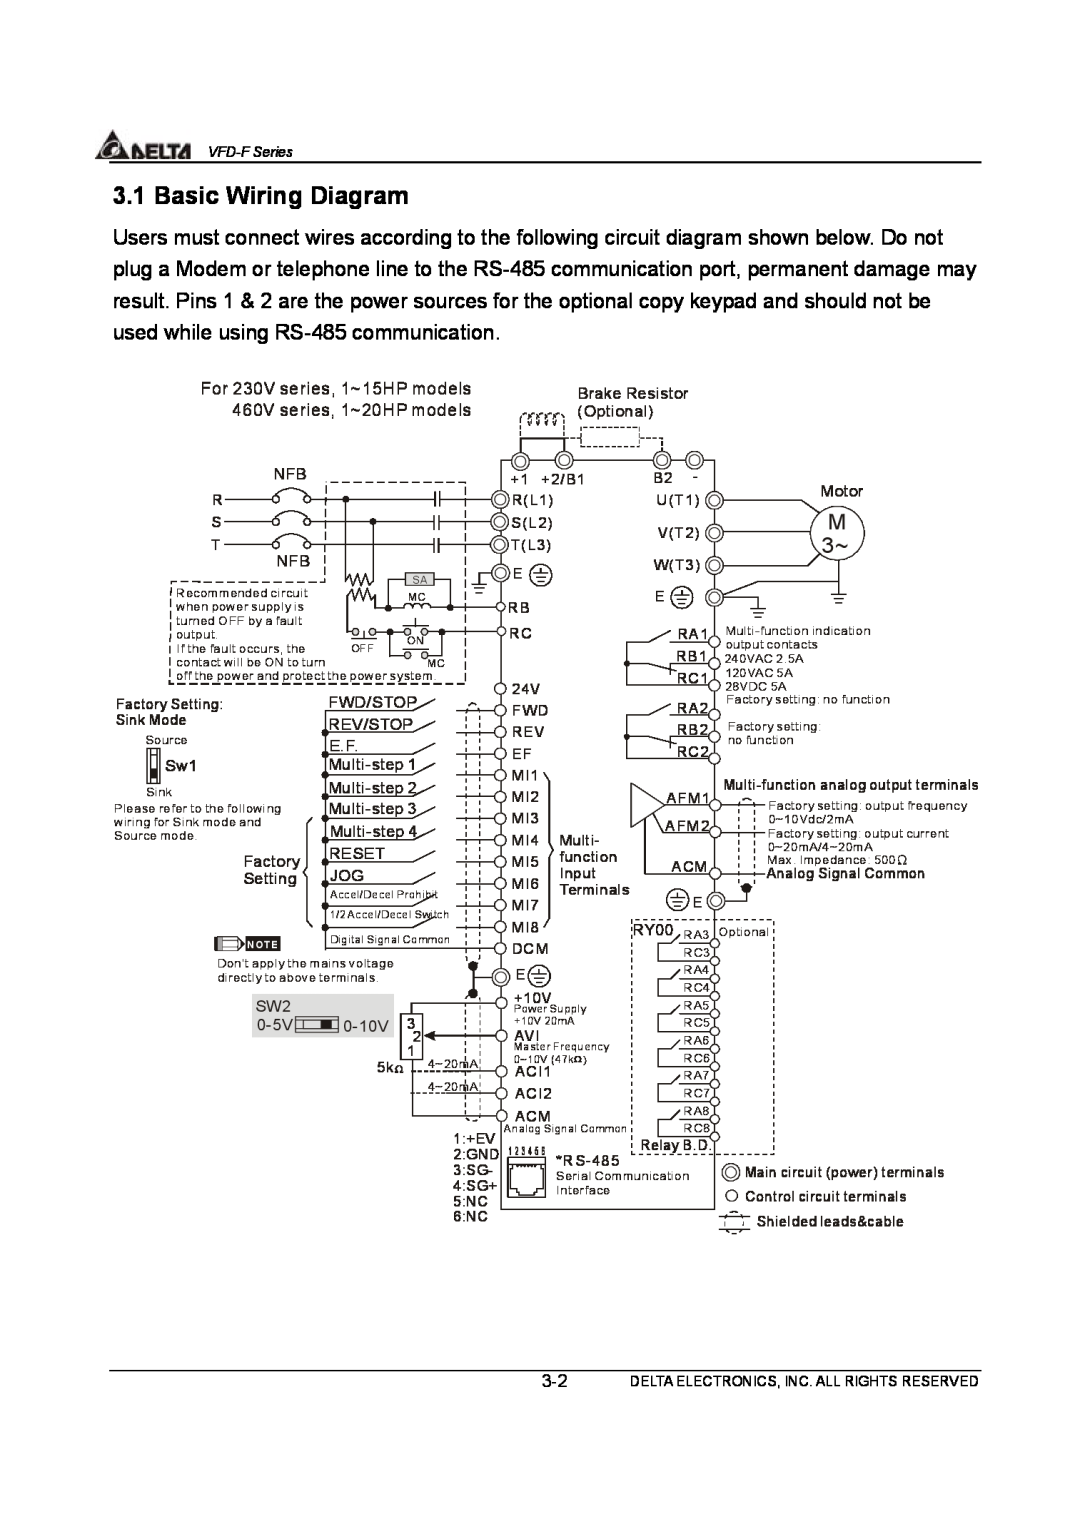 Delta Electronics VFD-F Series Basic Wiring Diagram, Brake Resistor, Optional, +1 +2/B1, Motor, Fwd/Stop, Rev/Stop, AFM1 